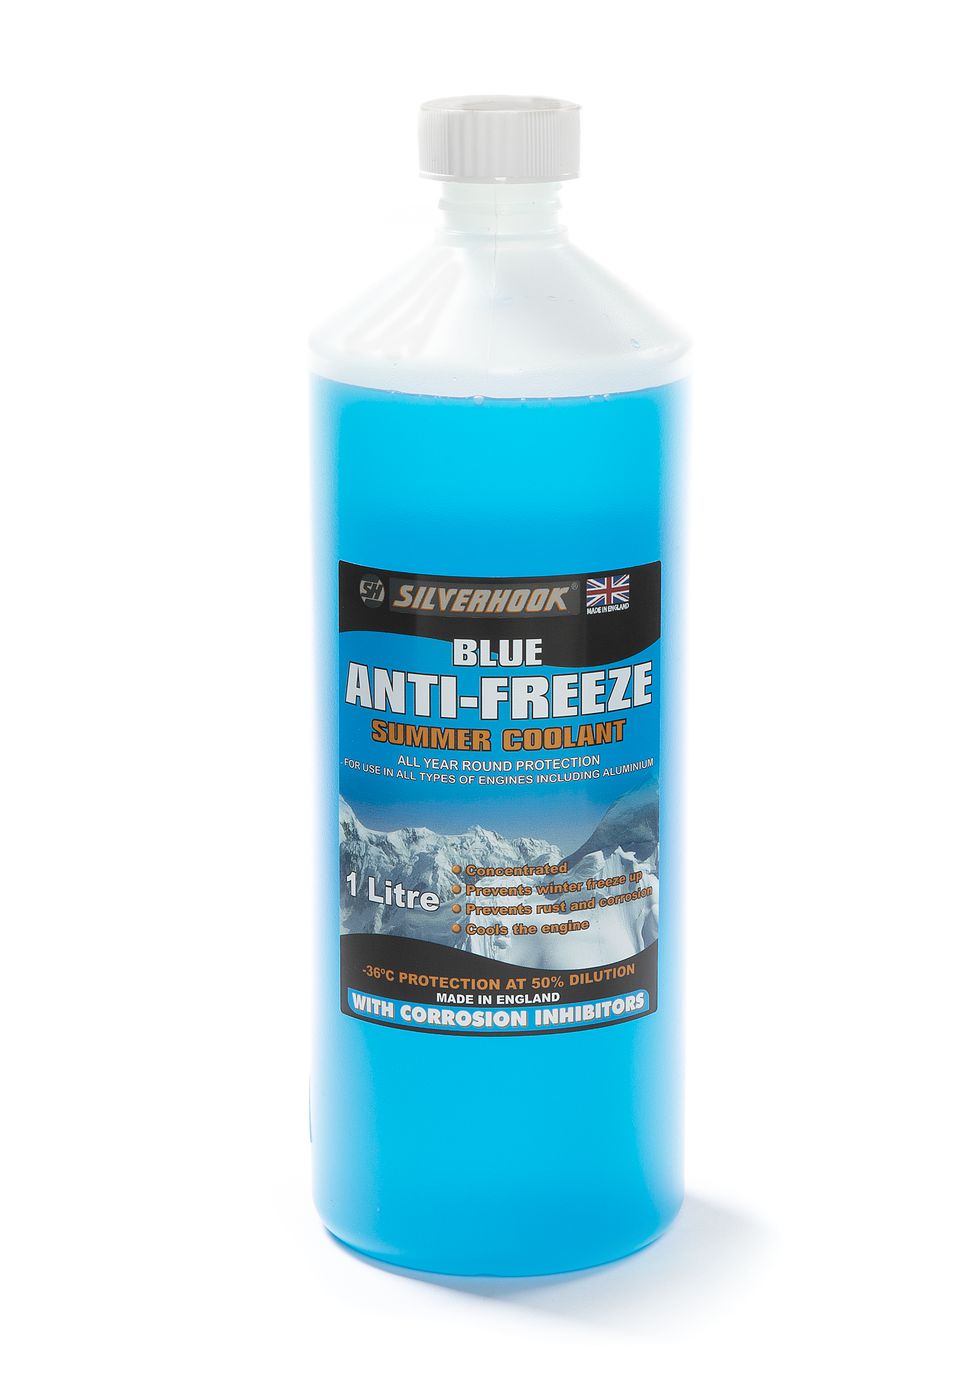 Frostschutz
Anti-freeze coolant
Antigel
Koelerantivries
Anticong